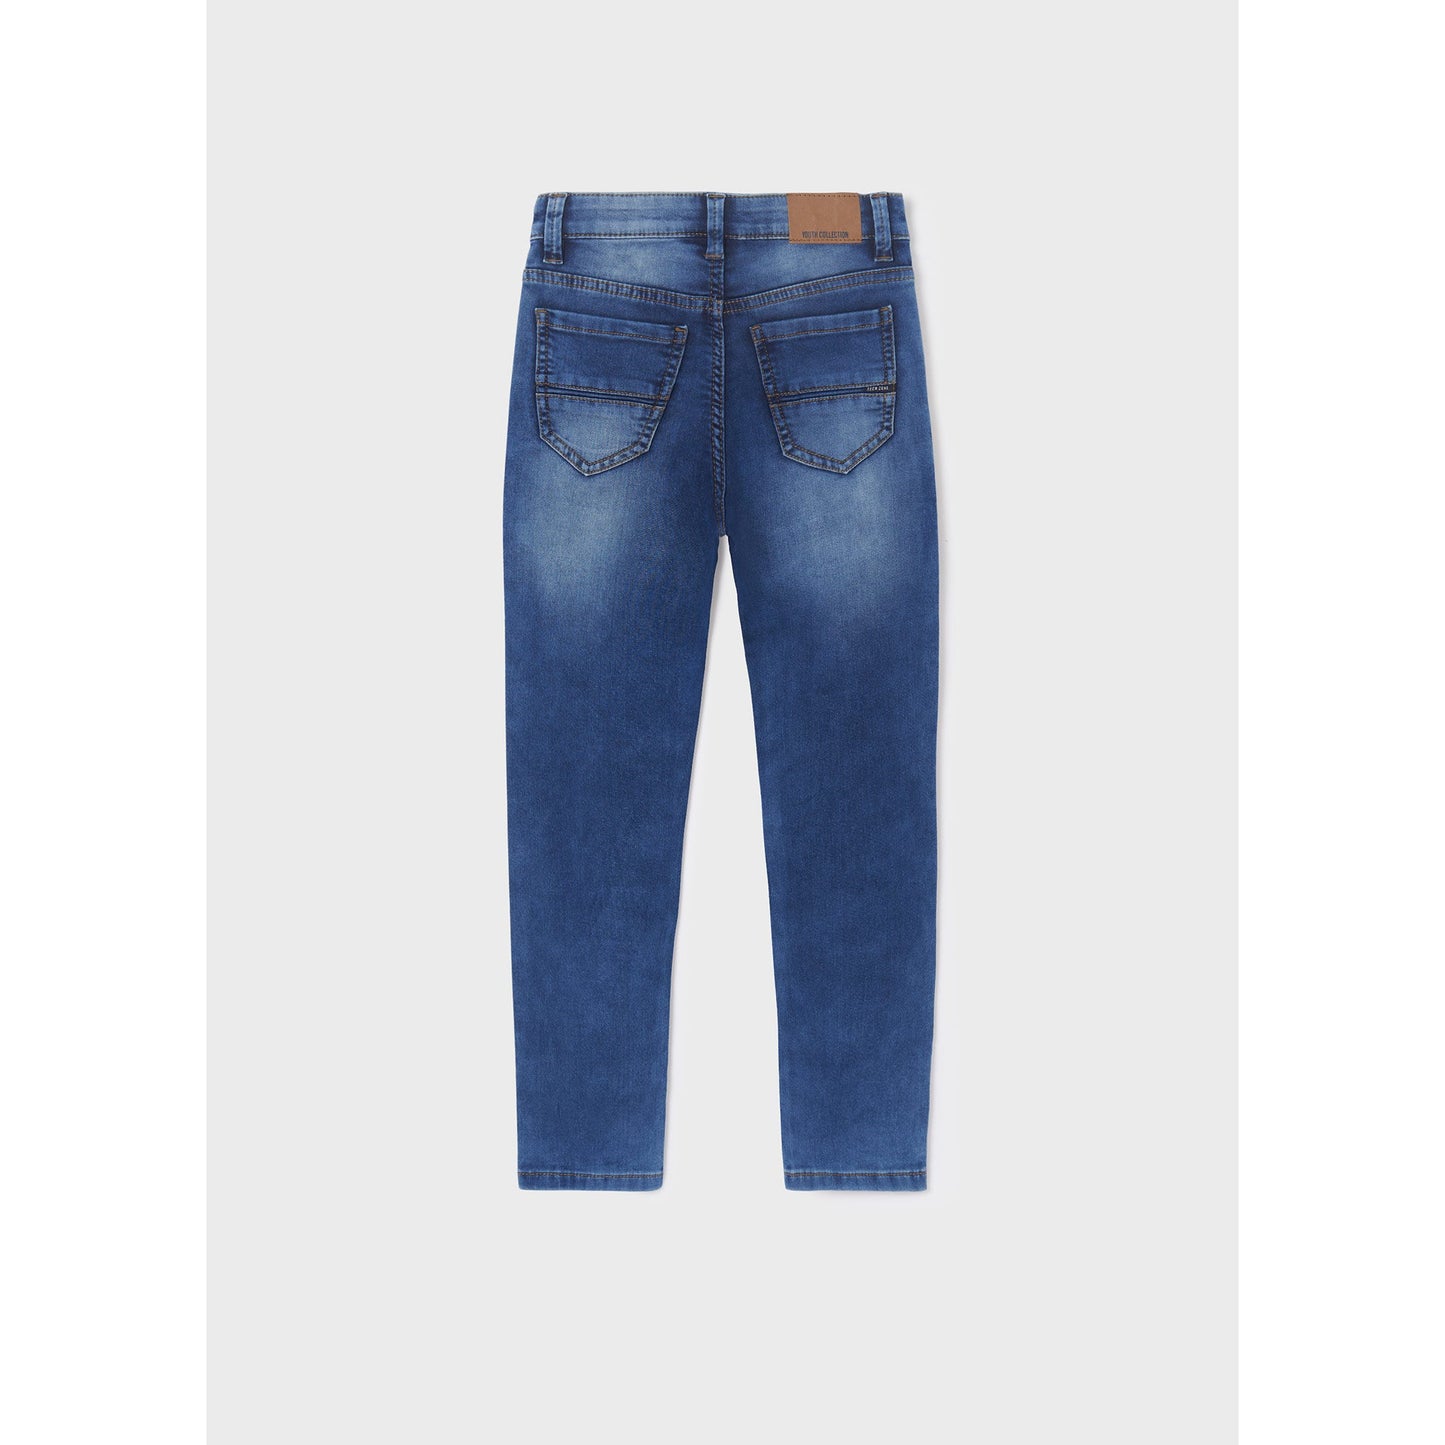 Nukutavake Soft Denim Pants _Medium Blue 6565-83